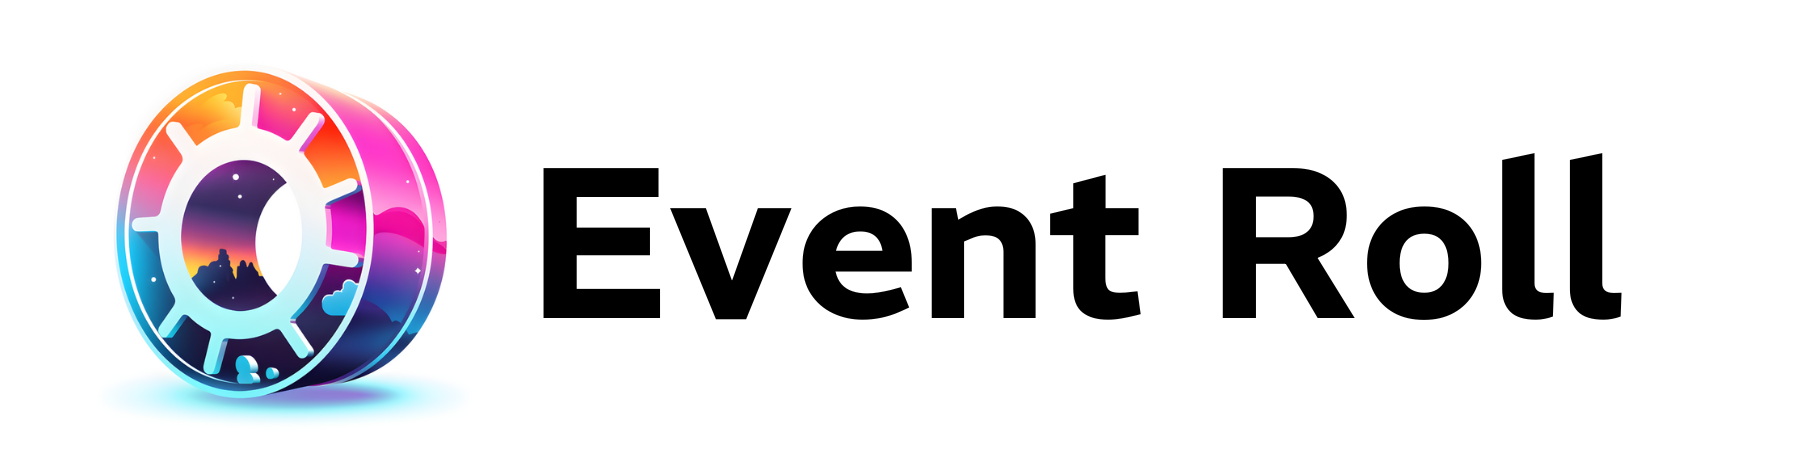 Event Roll logo